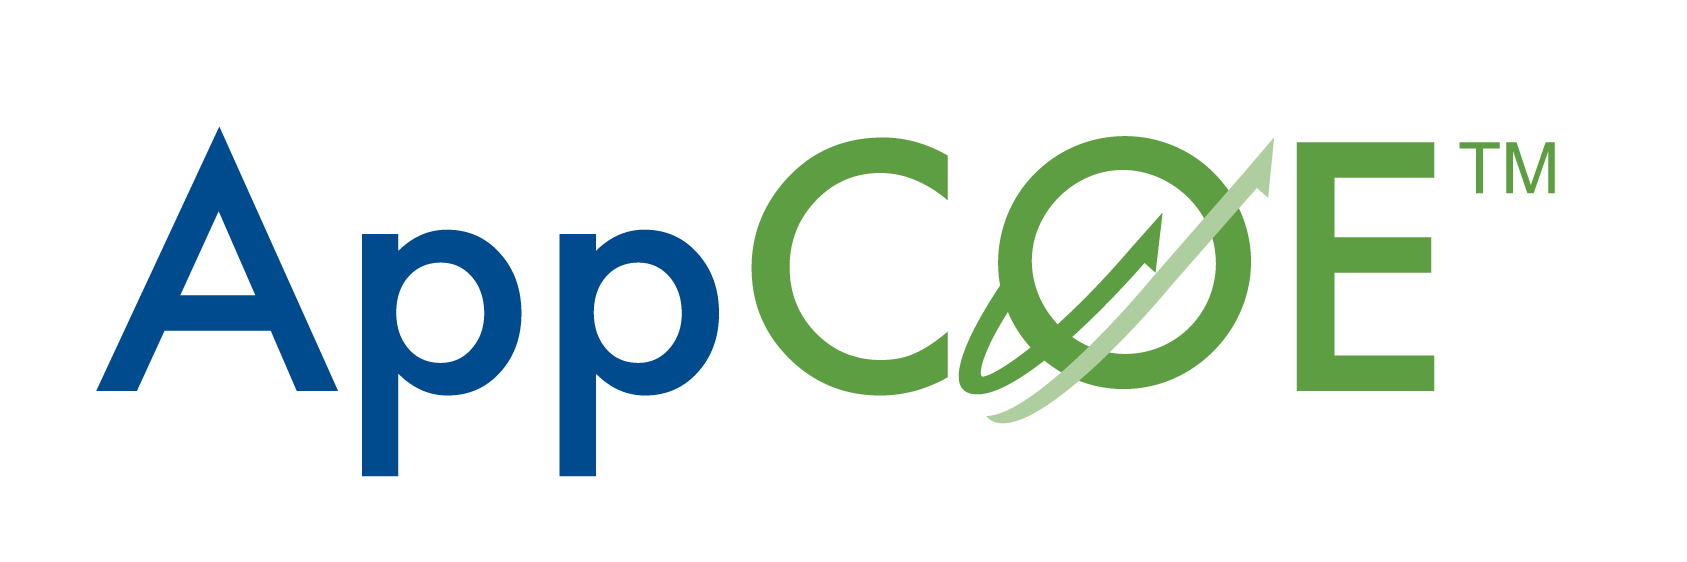 AppCOE_logo